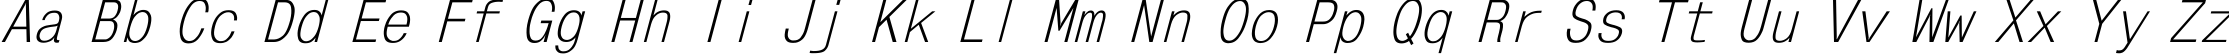 Пример написания английского алфавита шрифтом MonoCondensed Italic